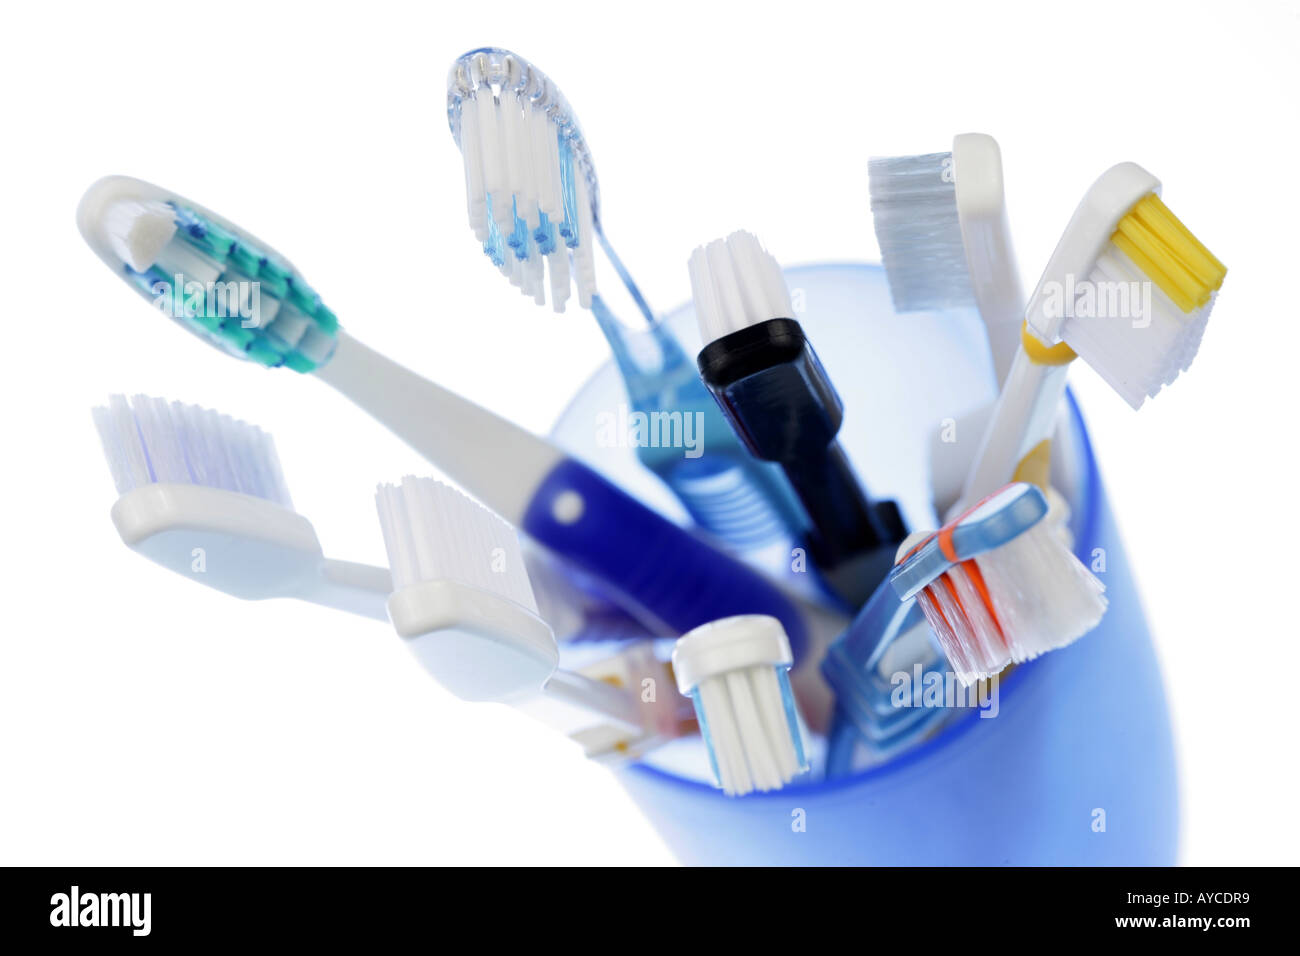 DEU Germany Toothbrush Stock Photo